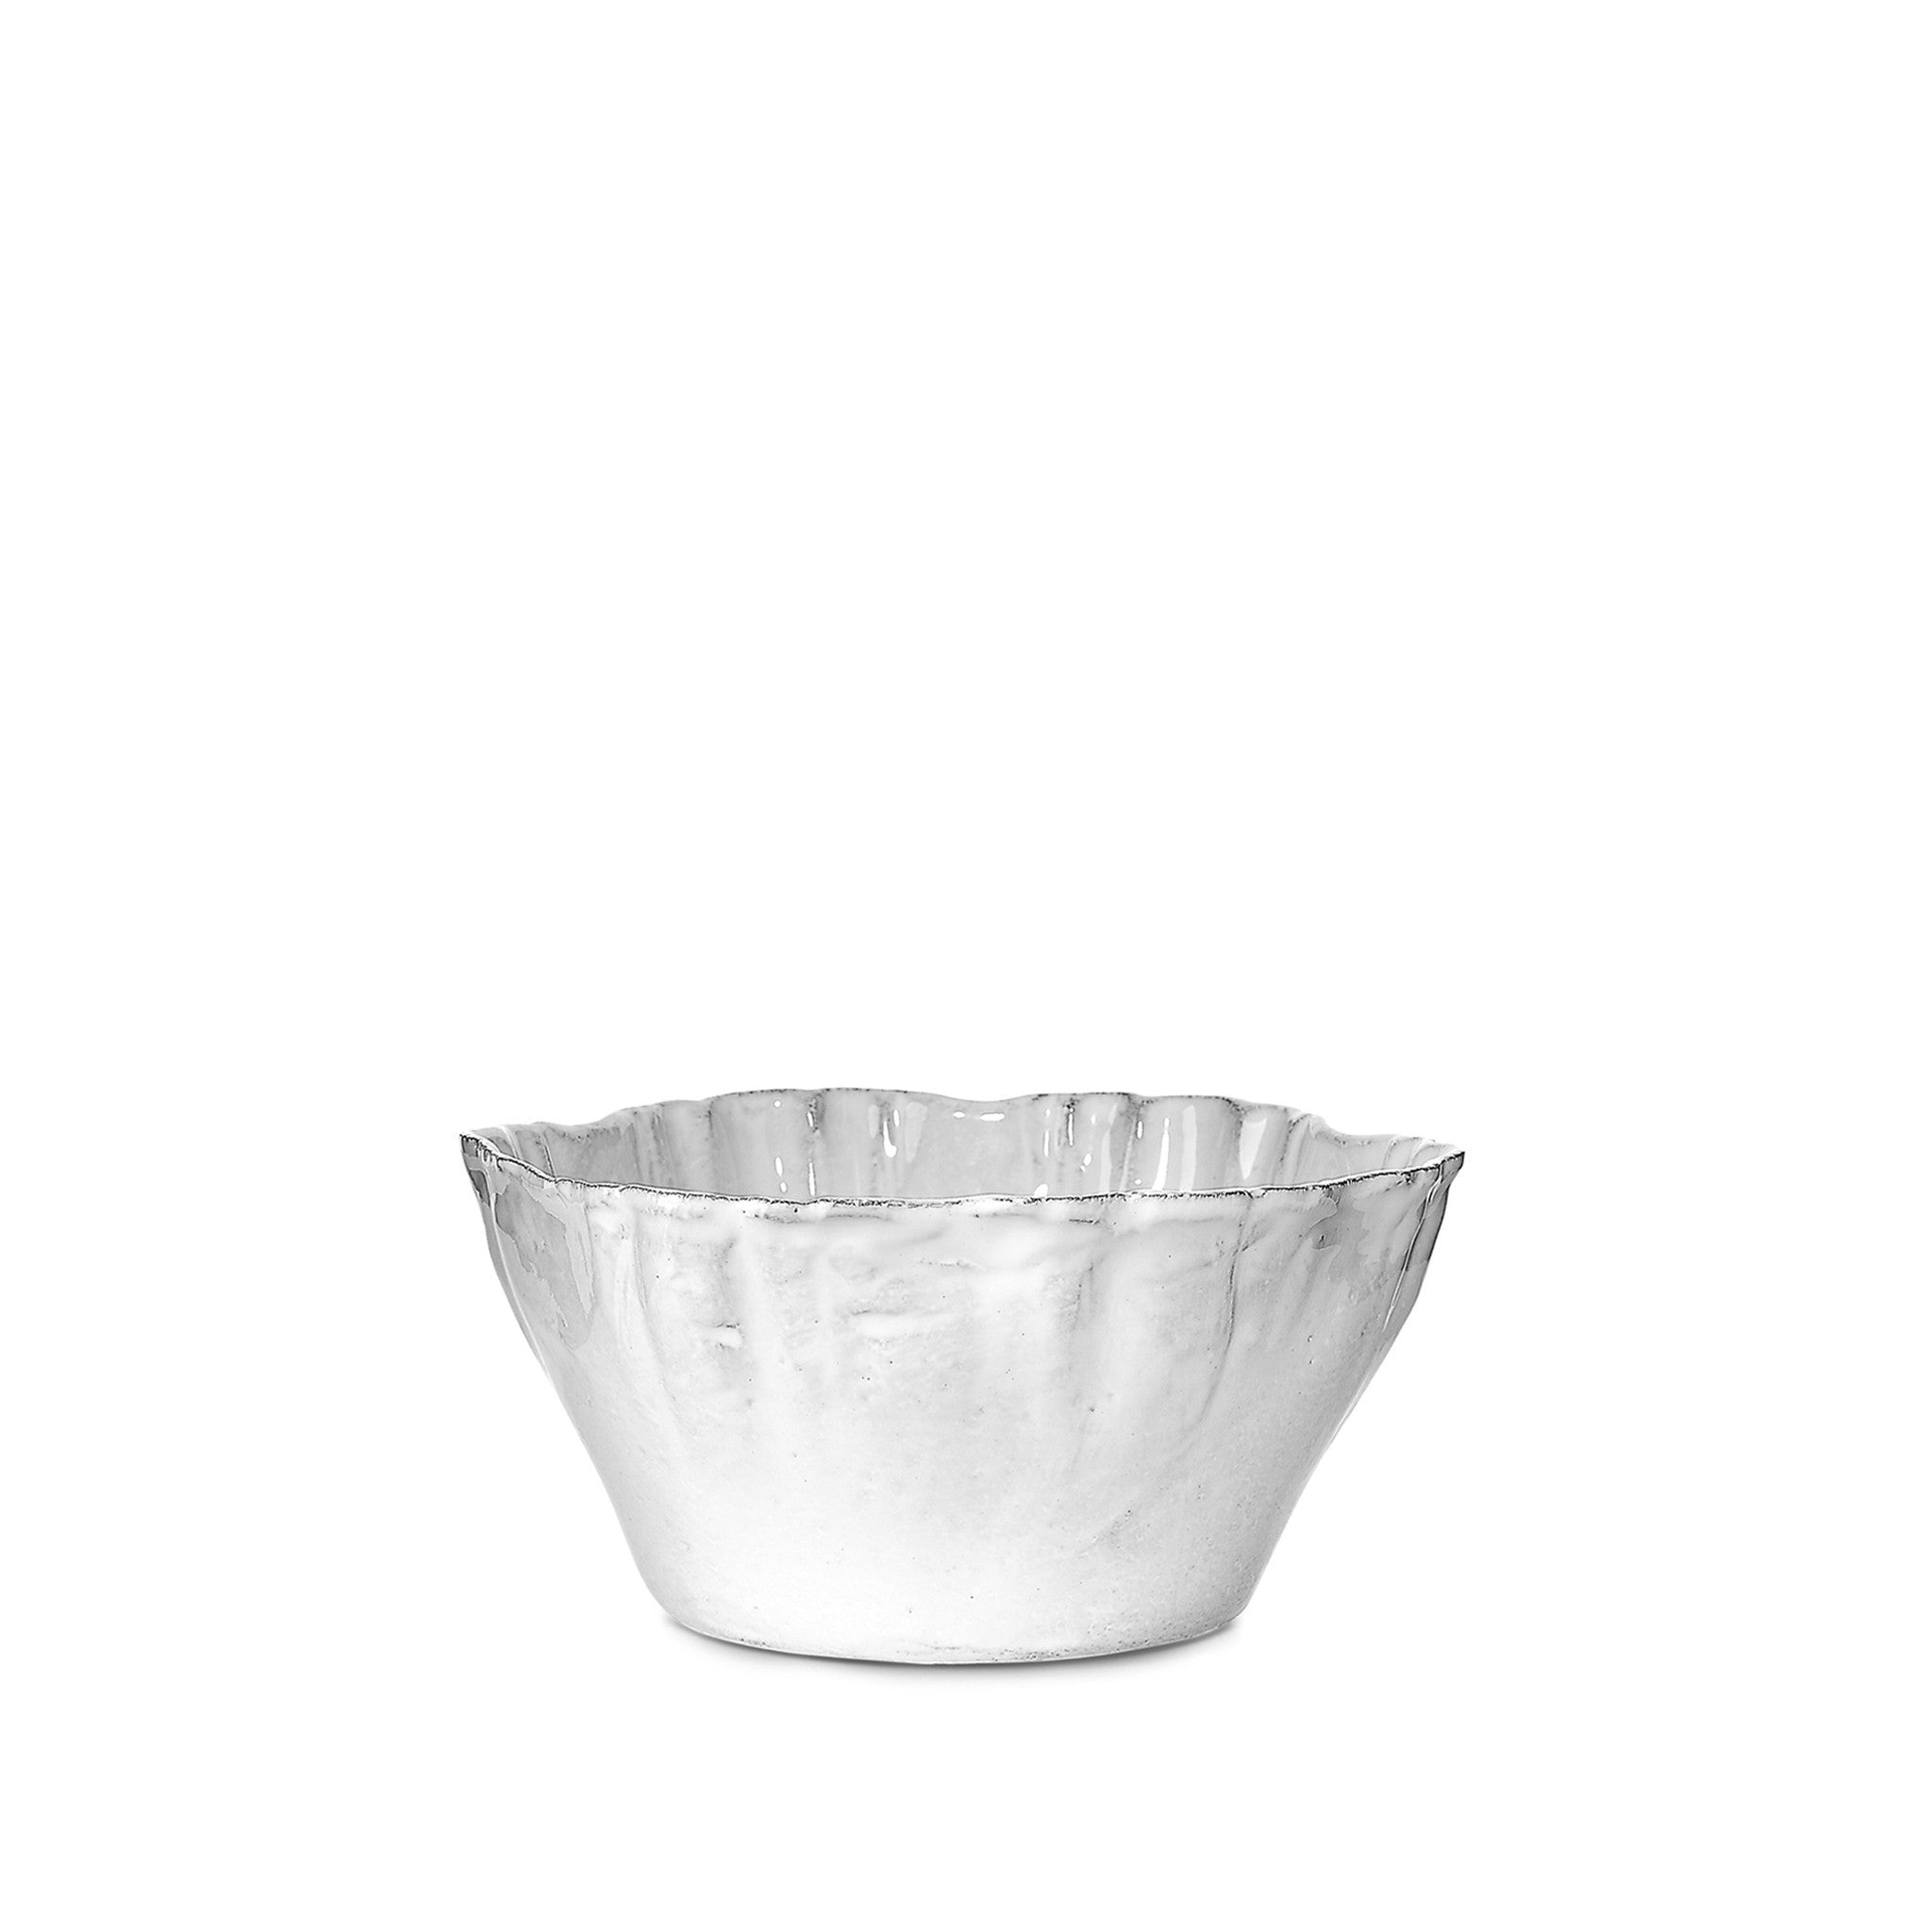 Victor Round Salad Bowl, Small by Astier de Villatte, 21cm